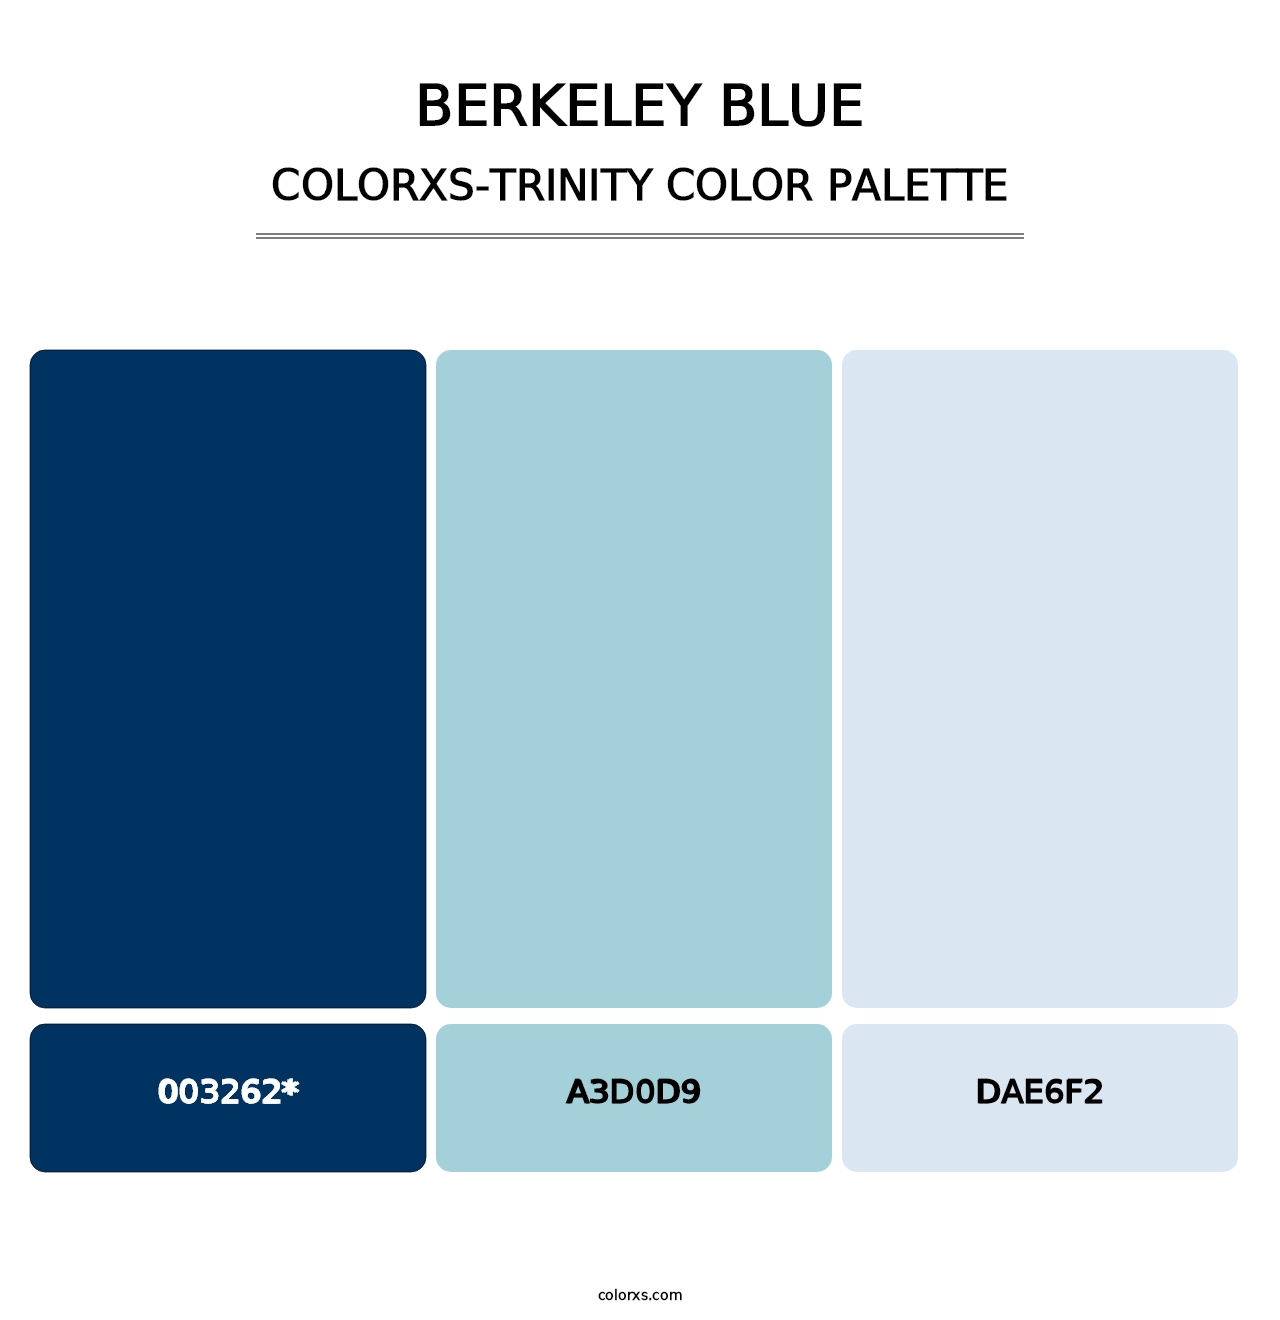 Berkeley Blue - Colorxs Trinity Palette